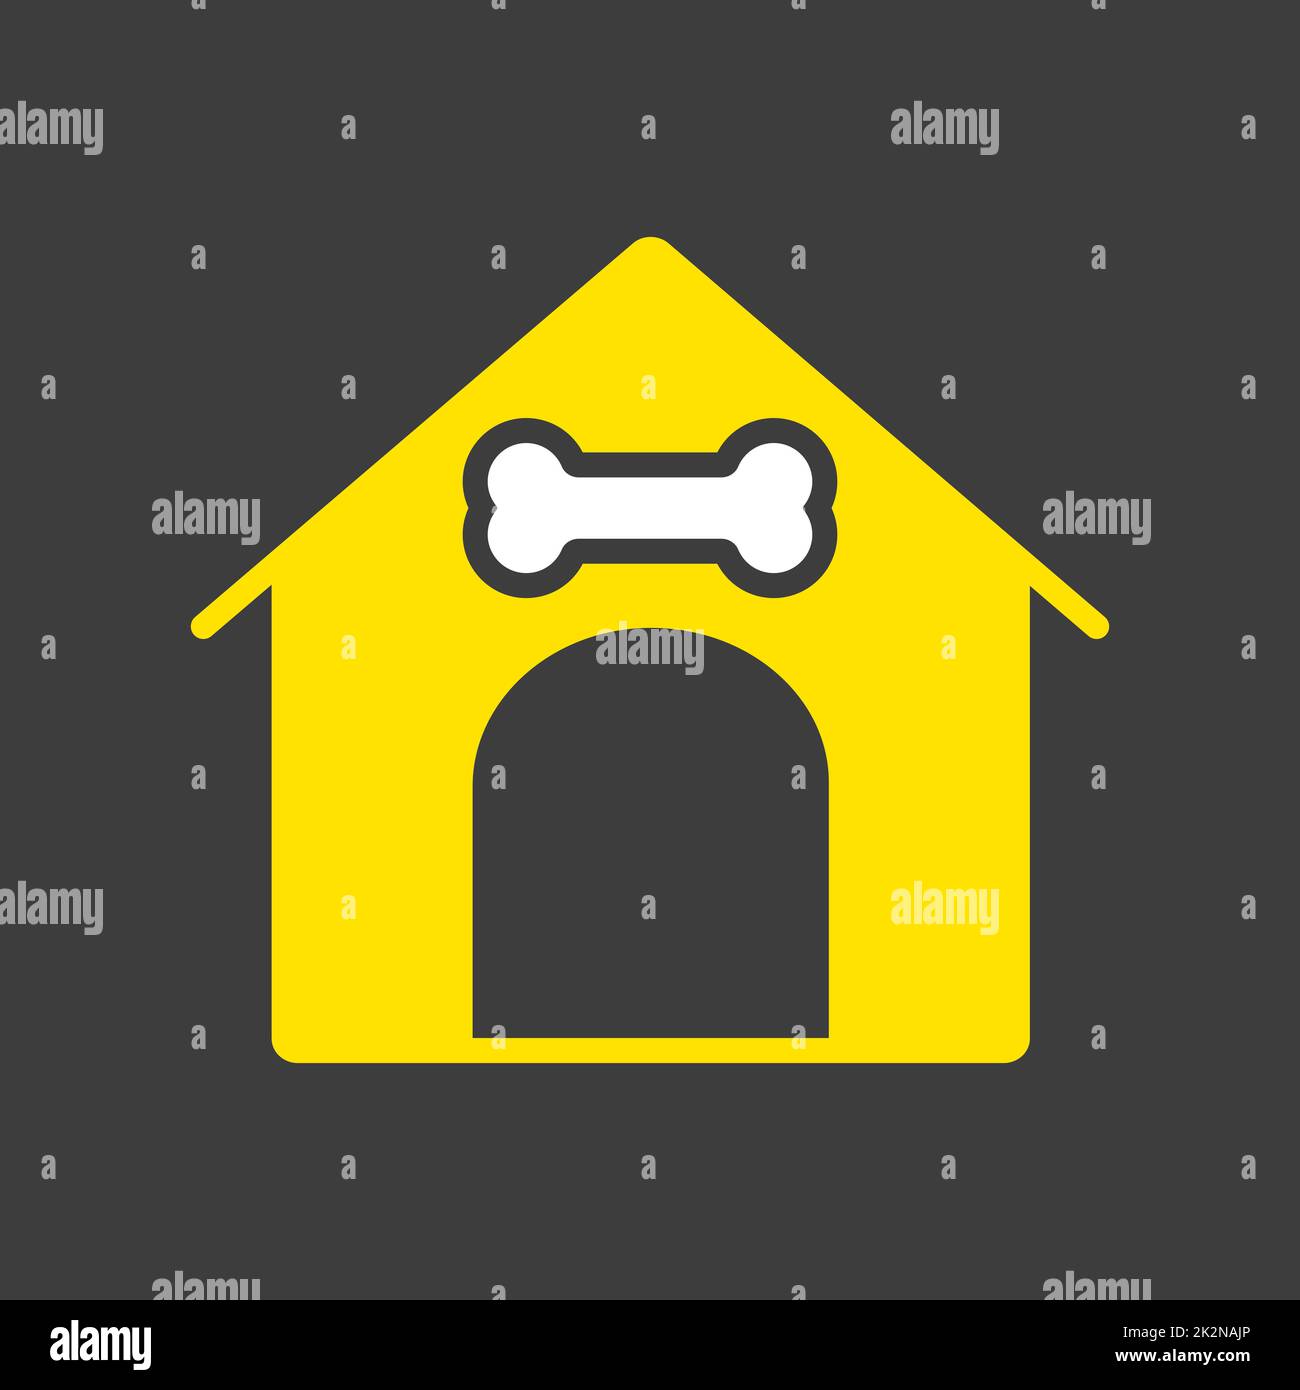 Dog house vector icon. Pet animal sign Stock Photo